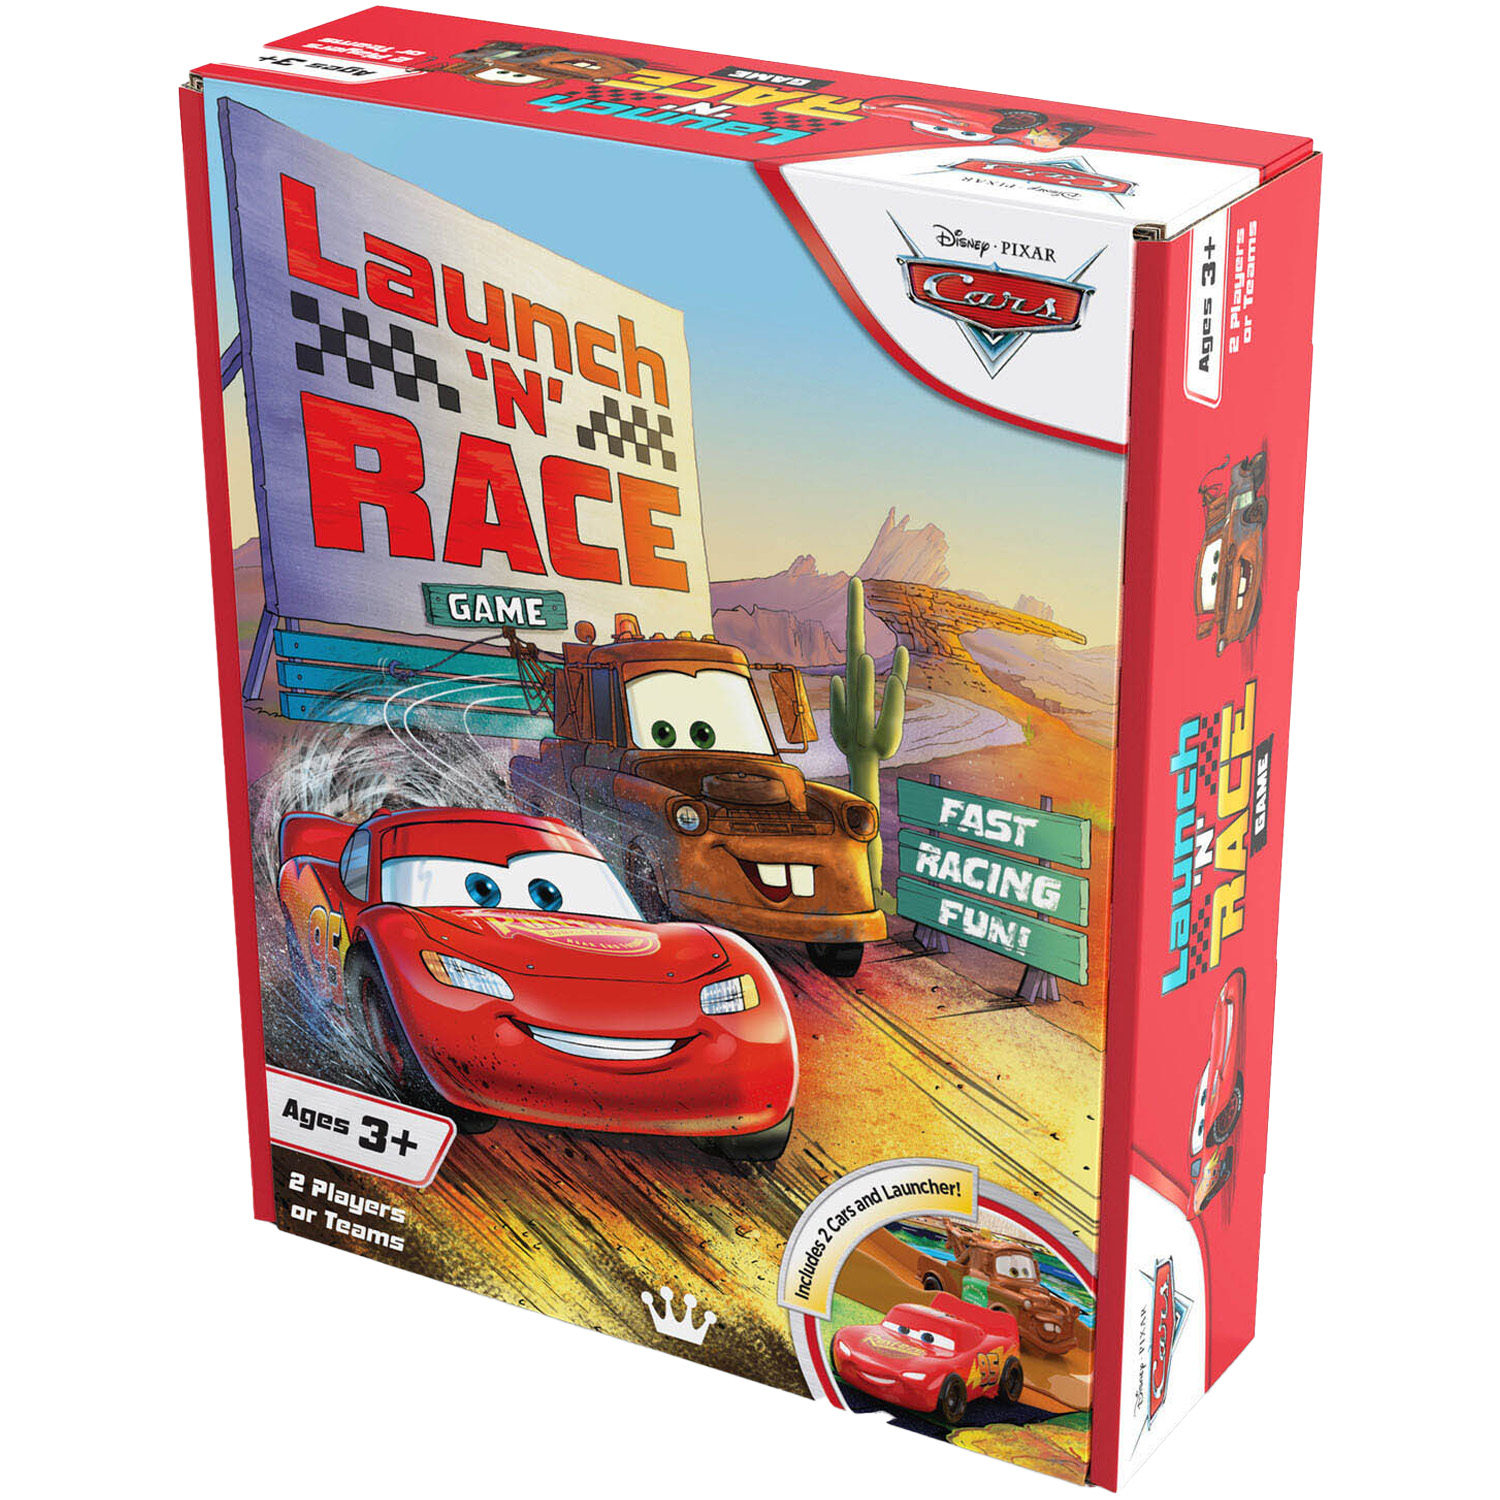 Disney Pixar Cars Launch N Race Game - Red Image 3